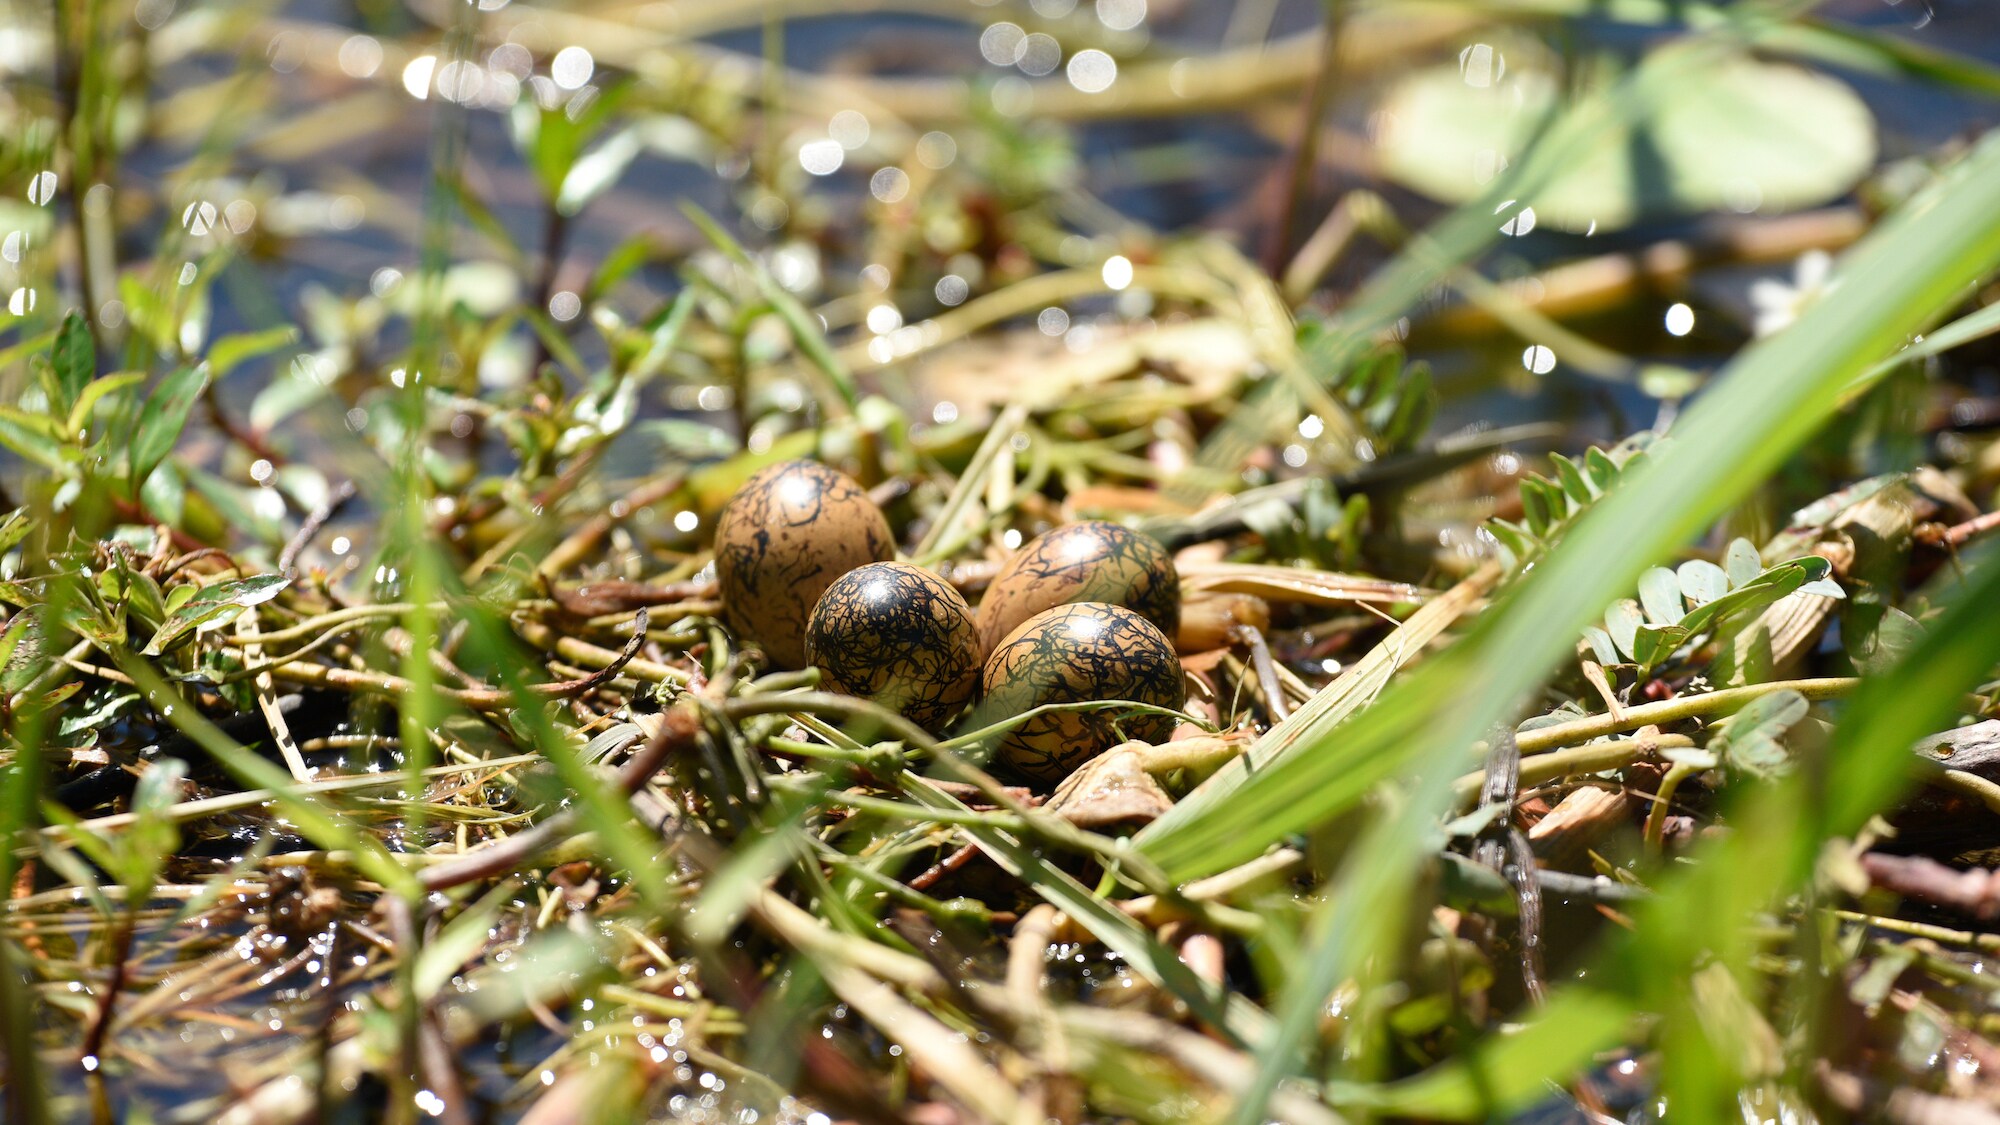 Jacana eggs on a grass nest. (National Geographic for Disney+/Carl Ruysenarr)